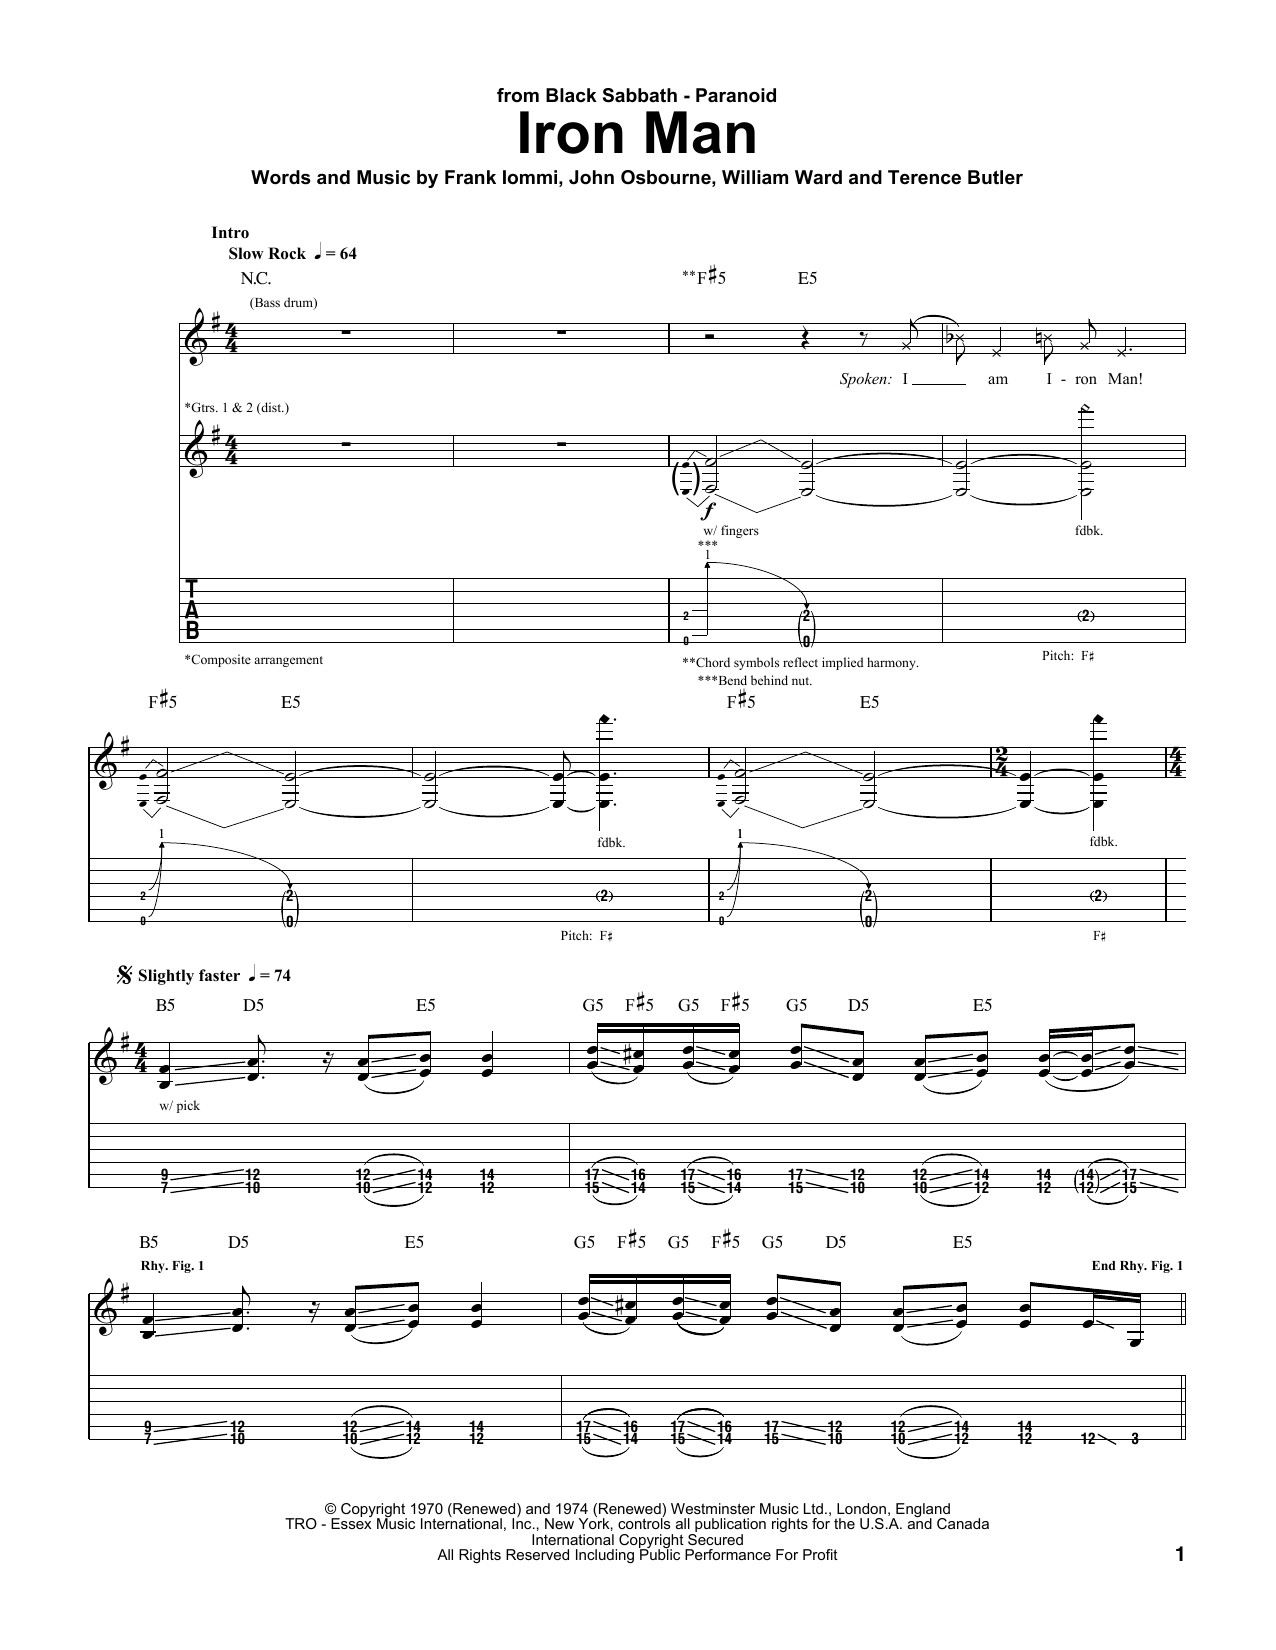 Black Sabbath Iron Man Sheet Music Notes & Chords for Bass Guitar Tab - Download or Print PDF